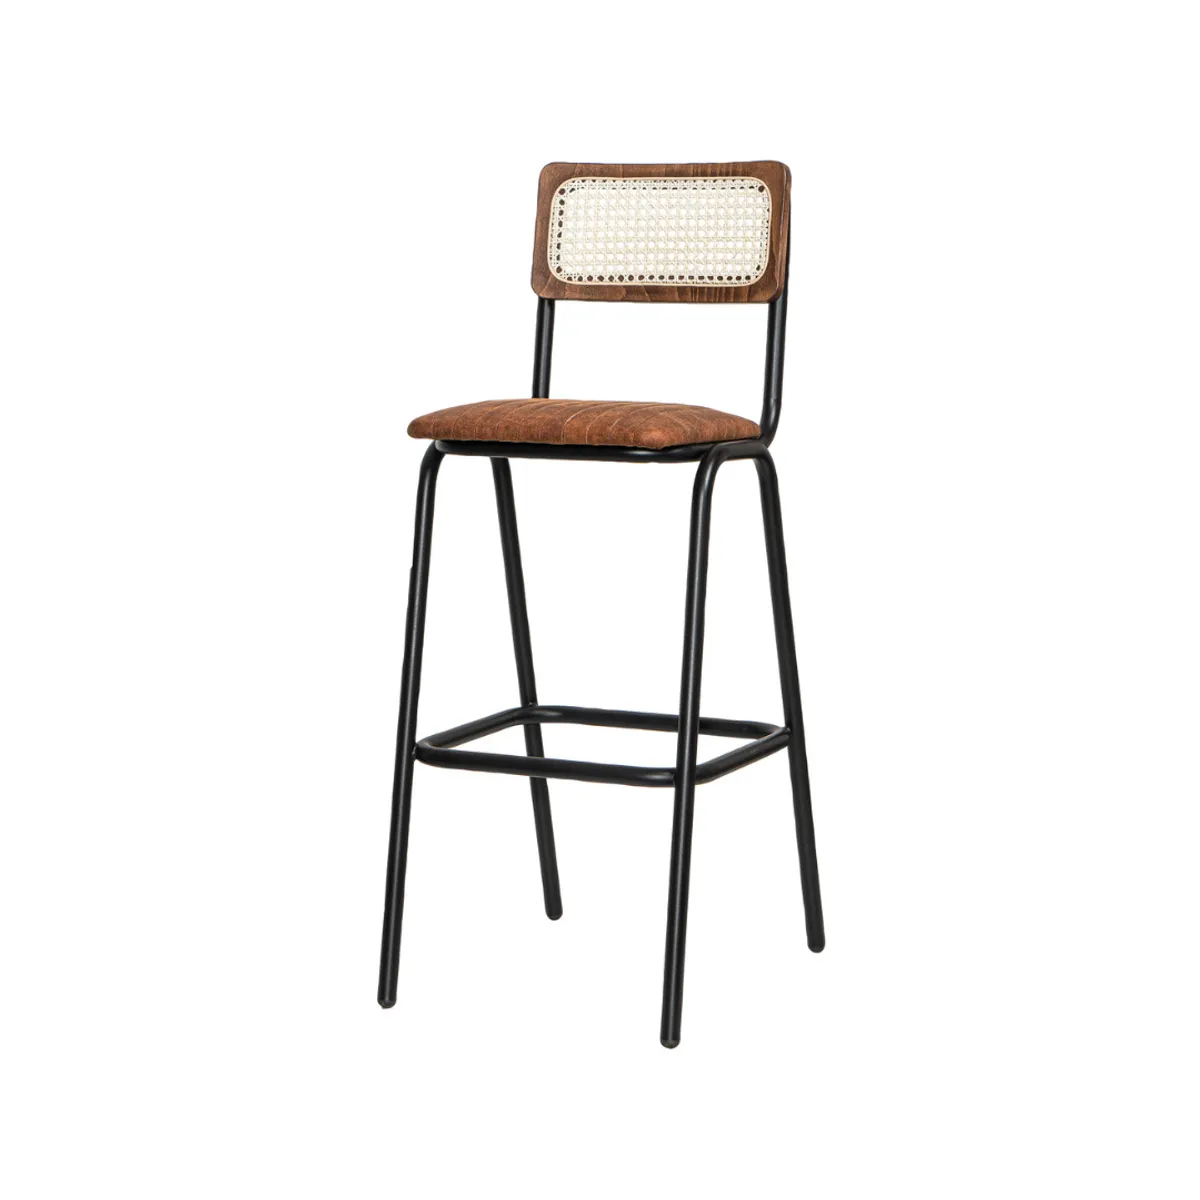 Colton soft bar stool